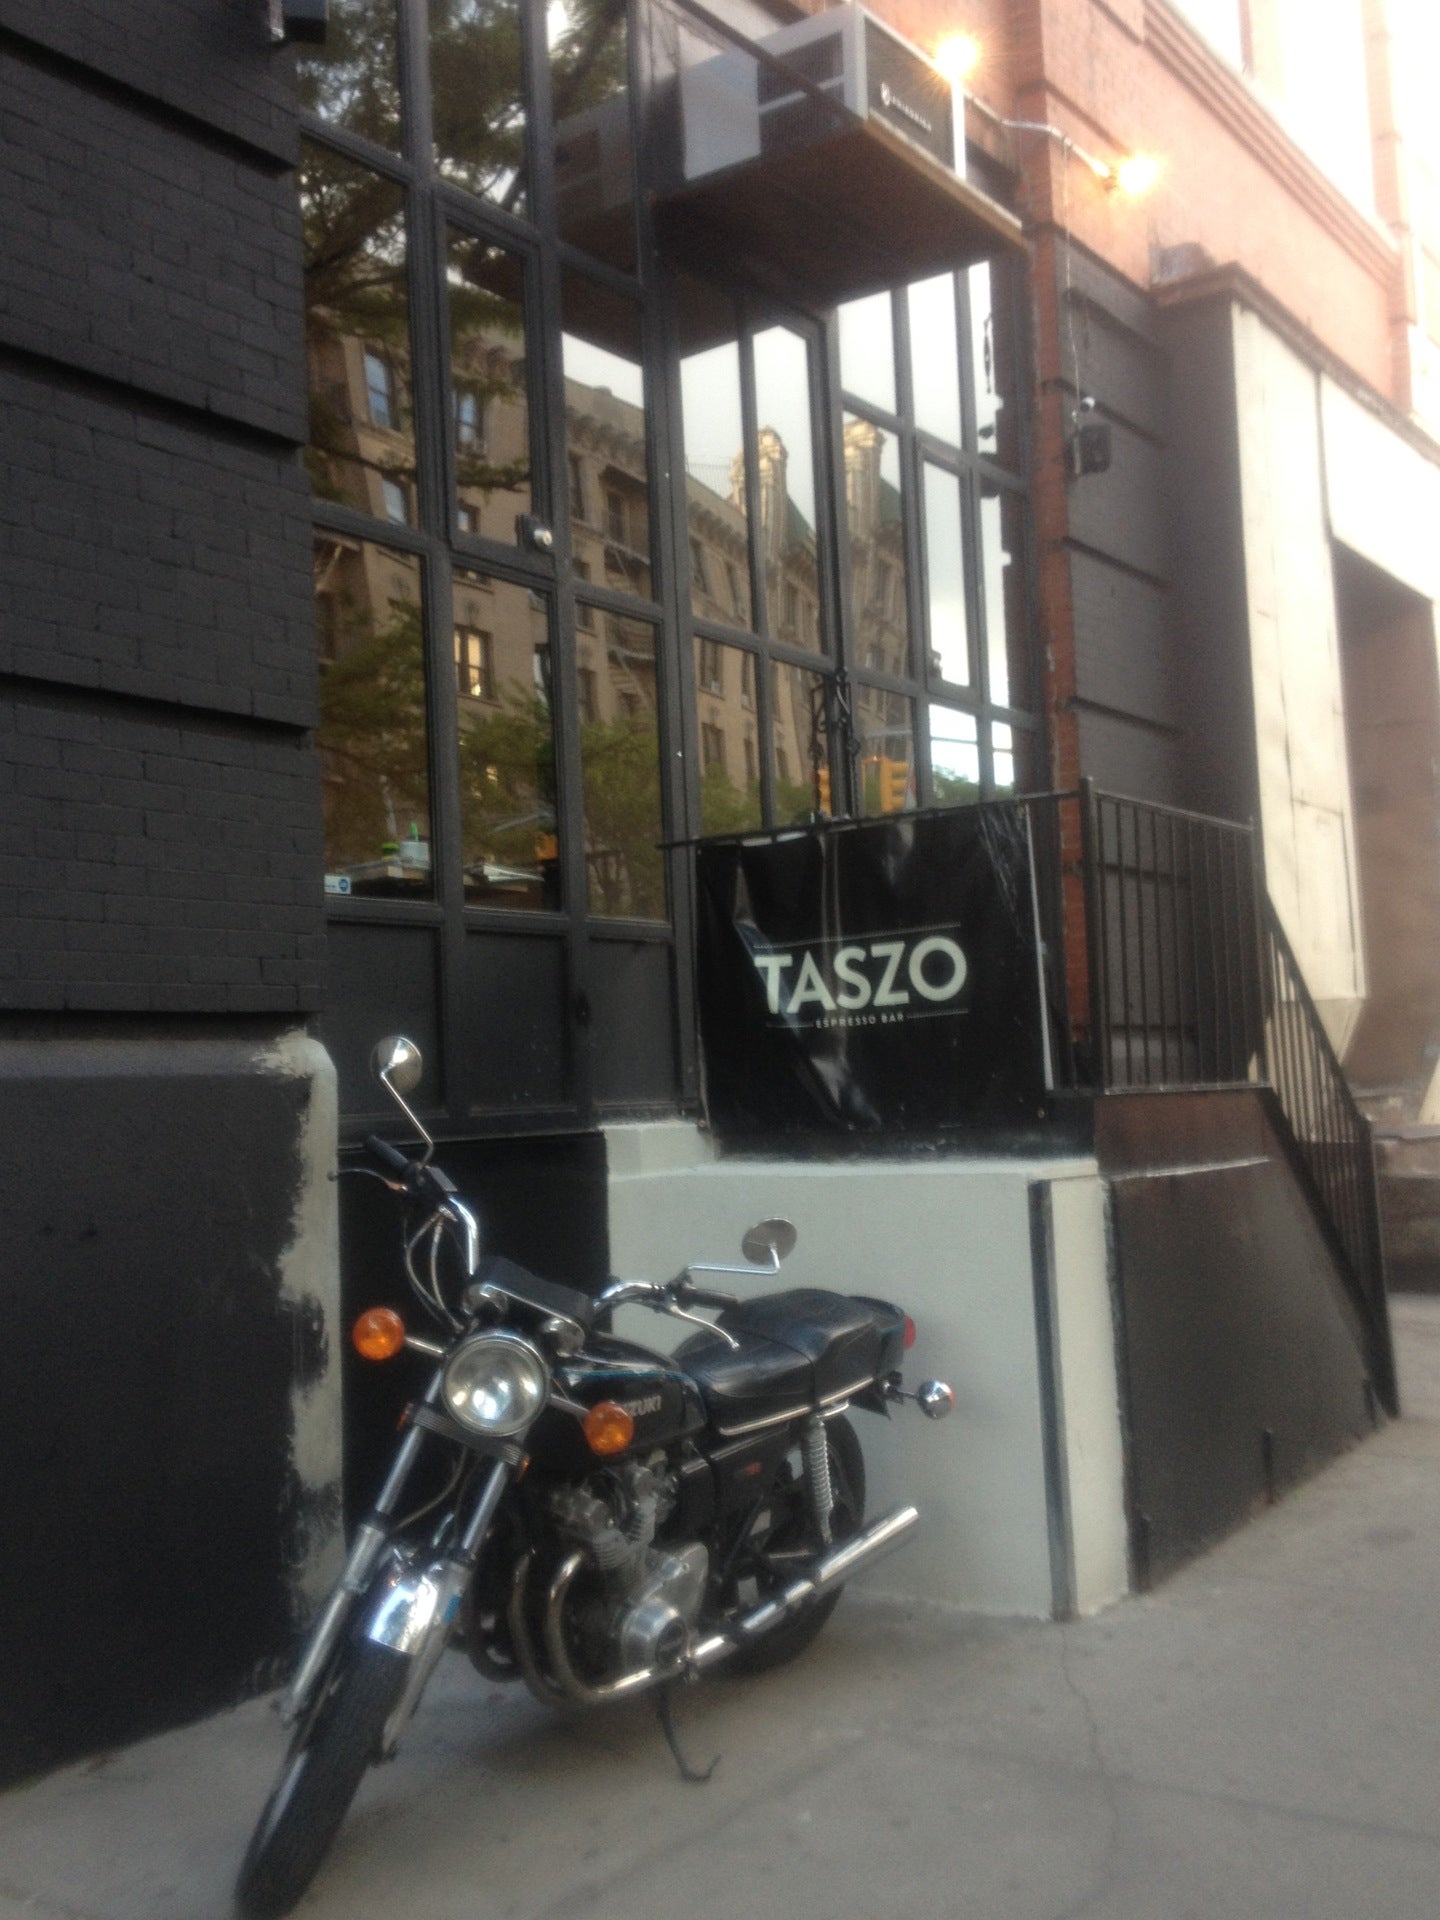 Taszo Espresso Bar